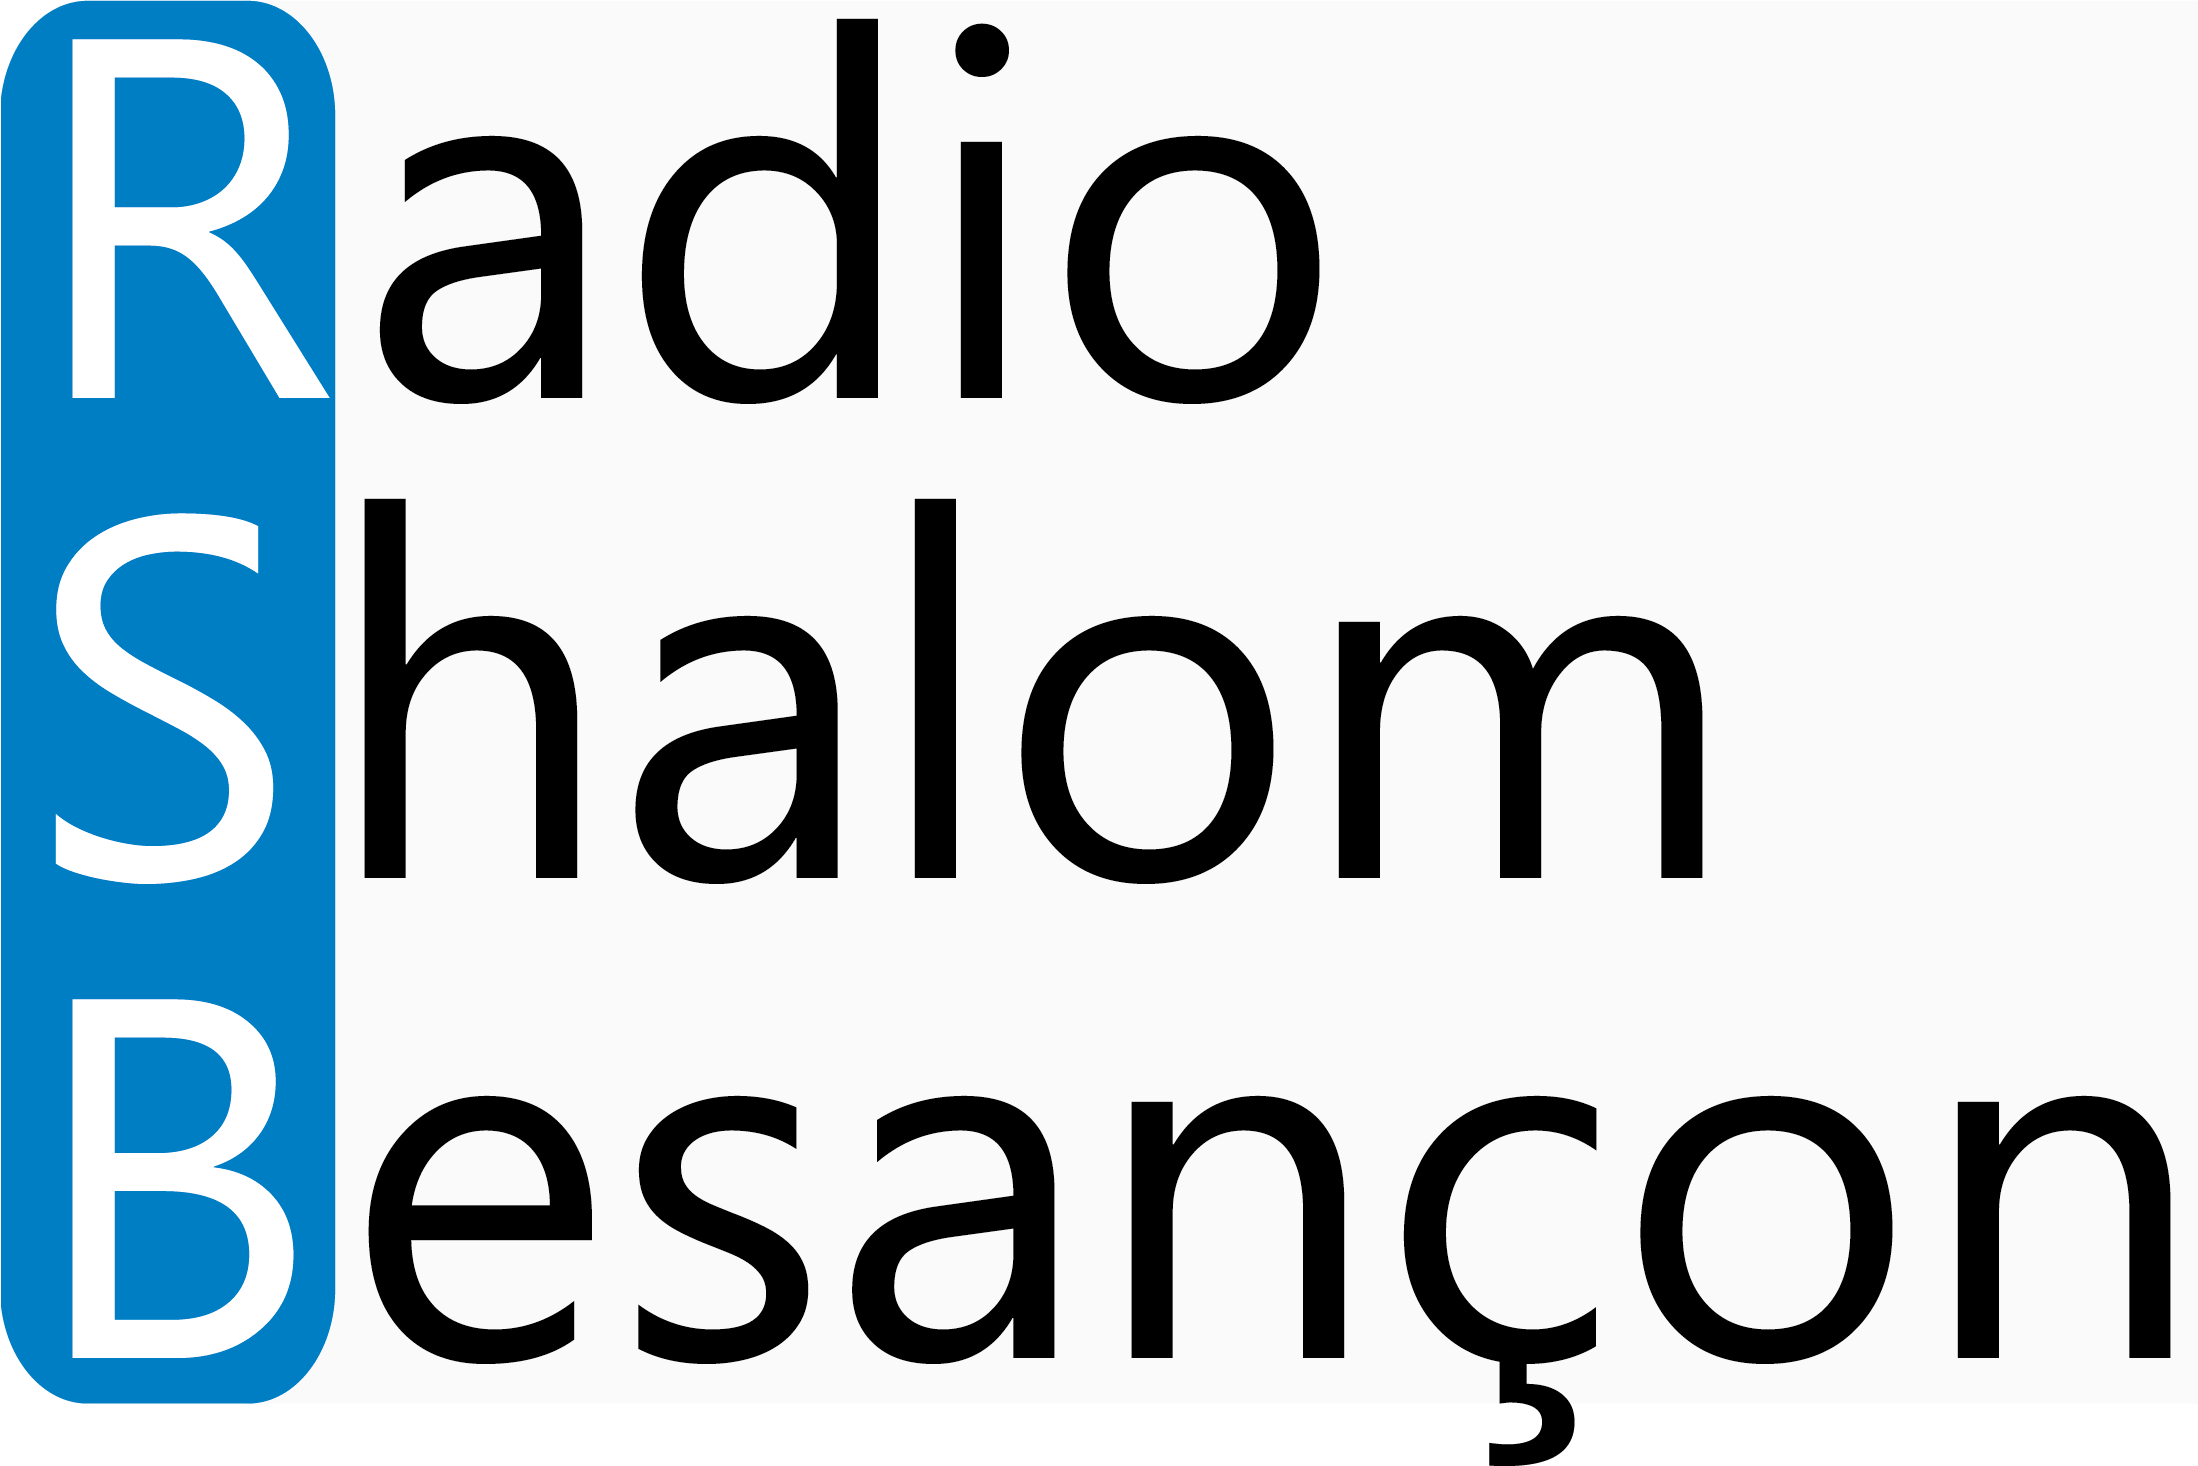 Radio Shalom Besançon